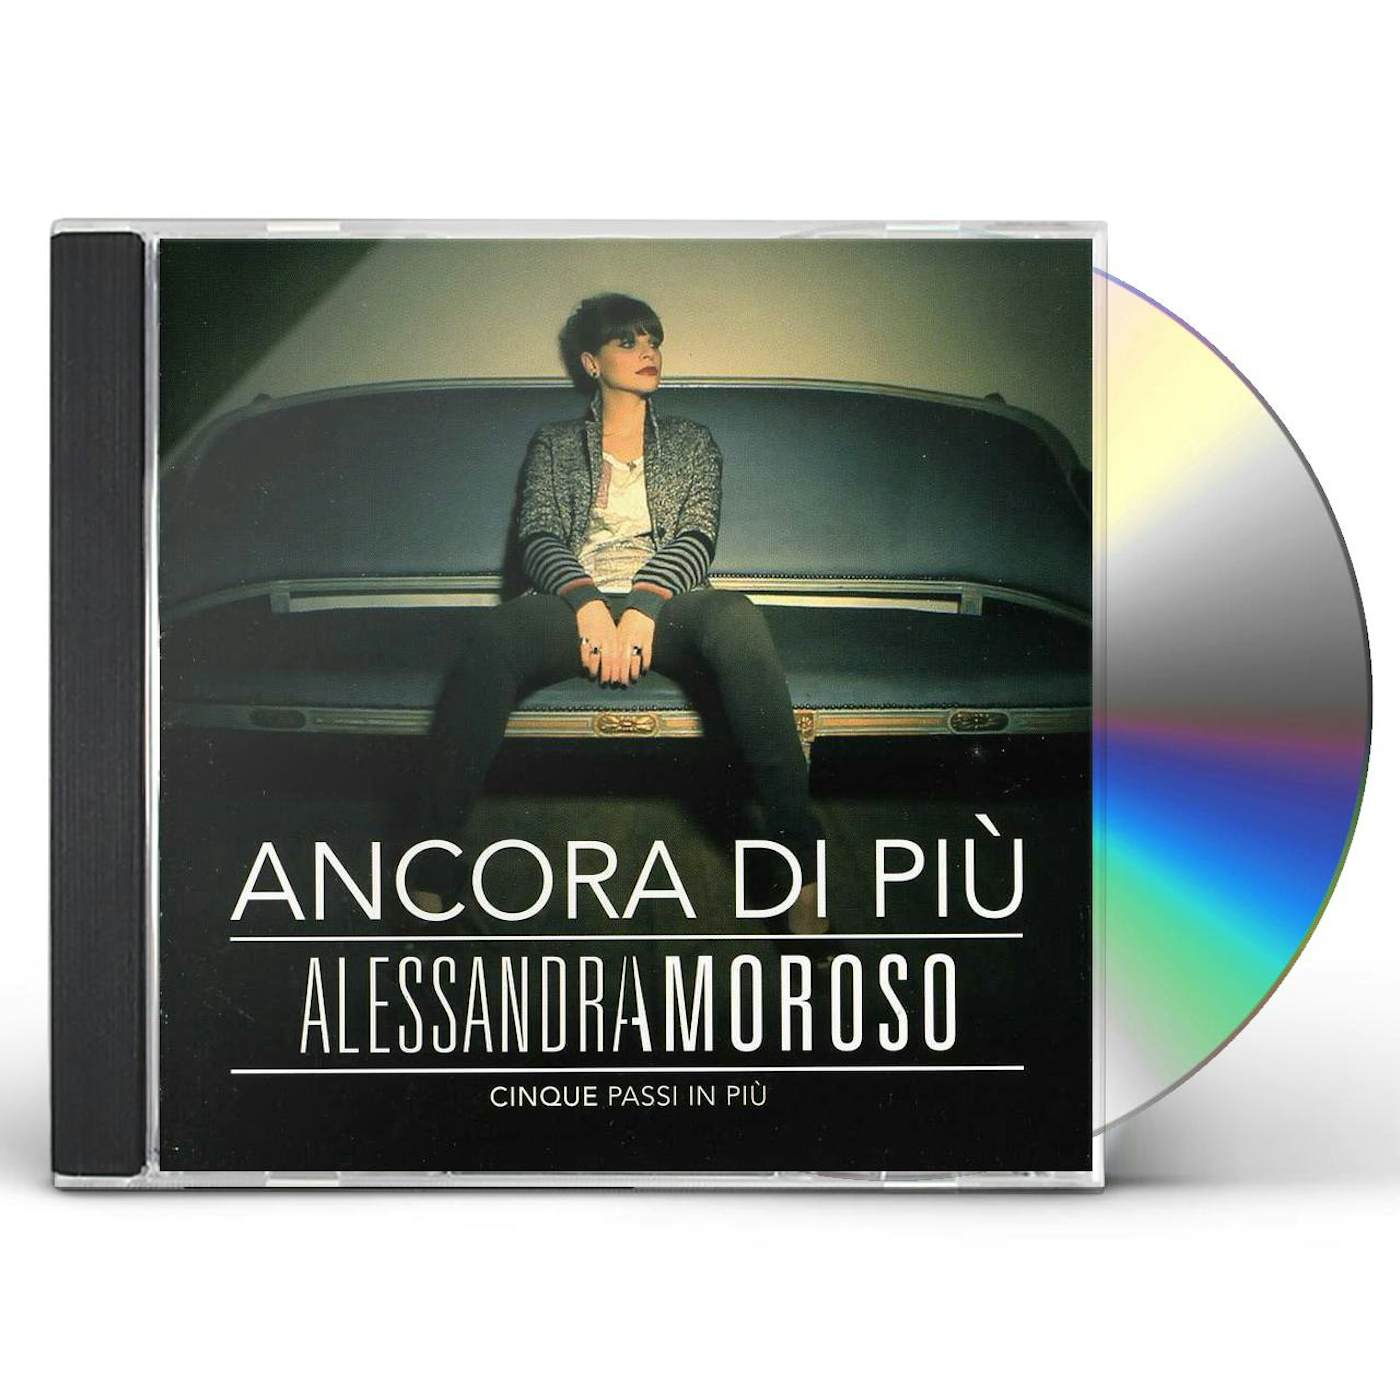 Alessandra Amoroso ANCORA DI PIU CINQUE PASSI IN PIU CD